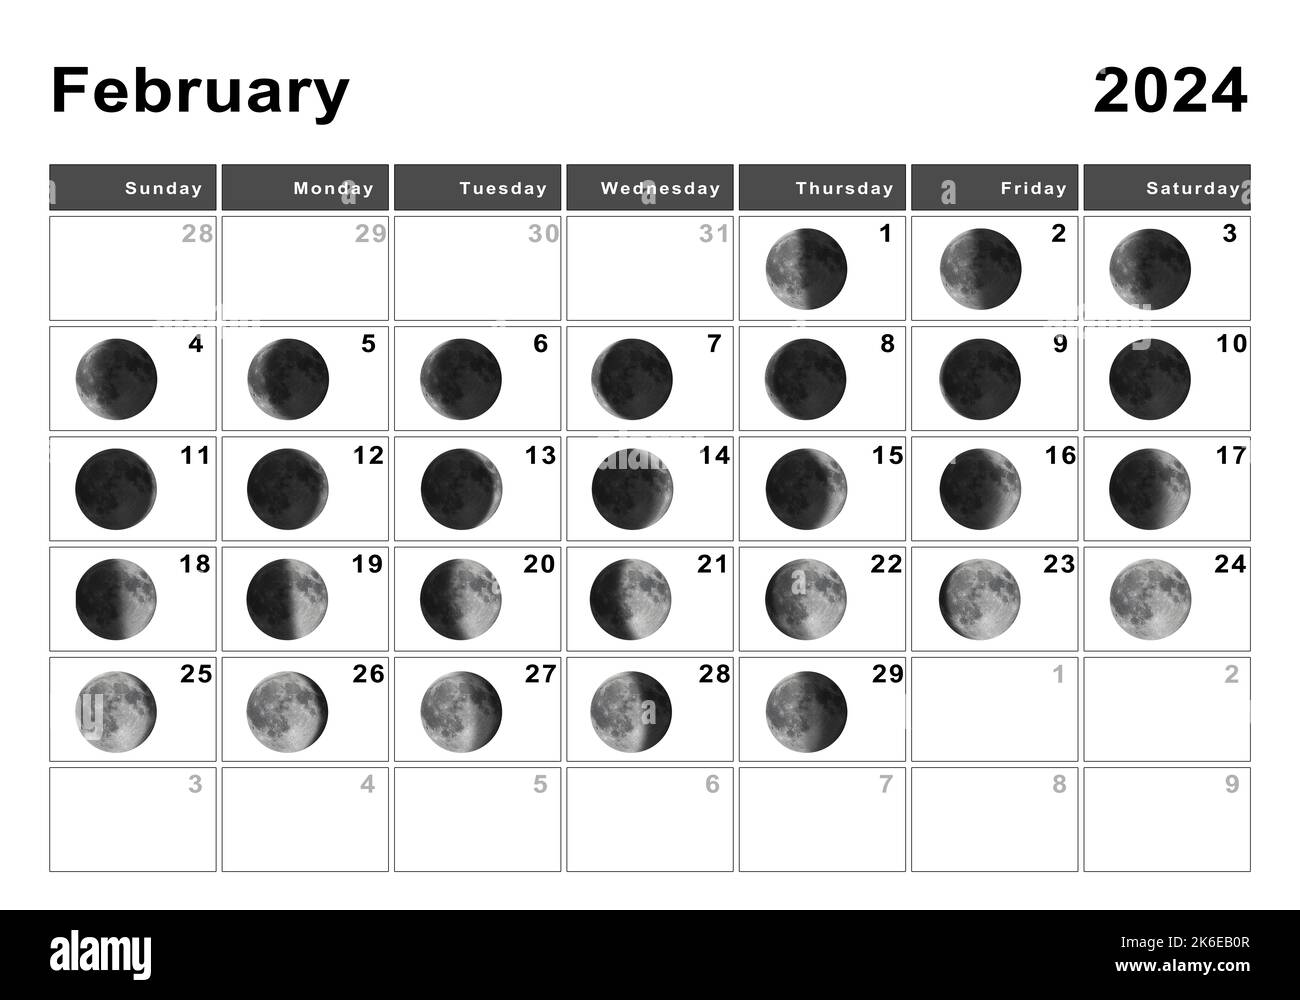 February 2024 Lunar calendar, Moon cycles, Moon Phases Stock Photo Alamy